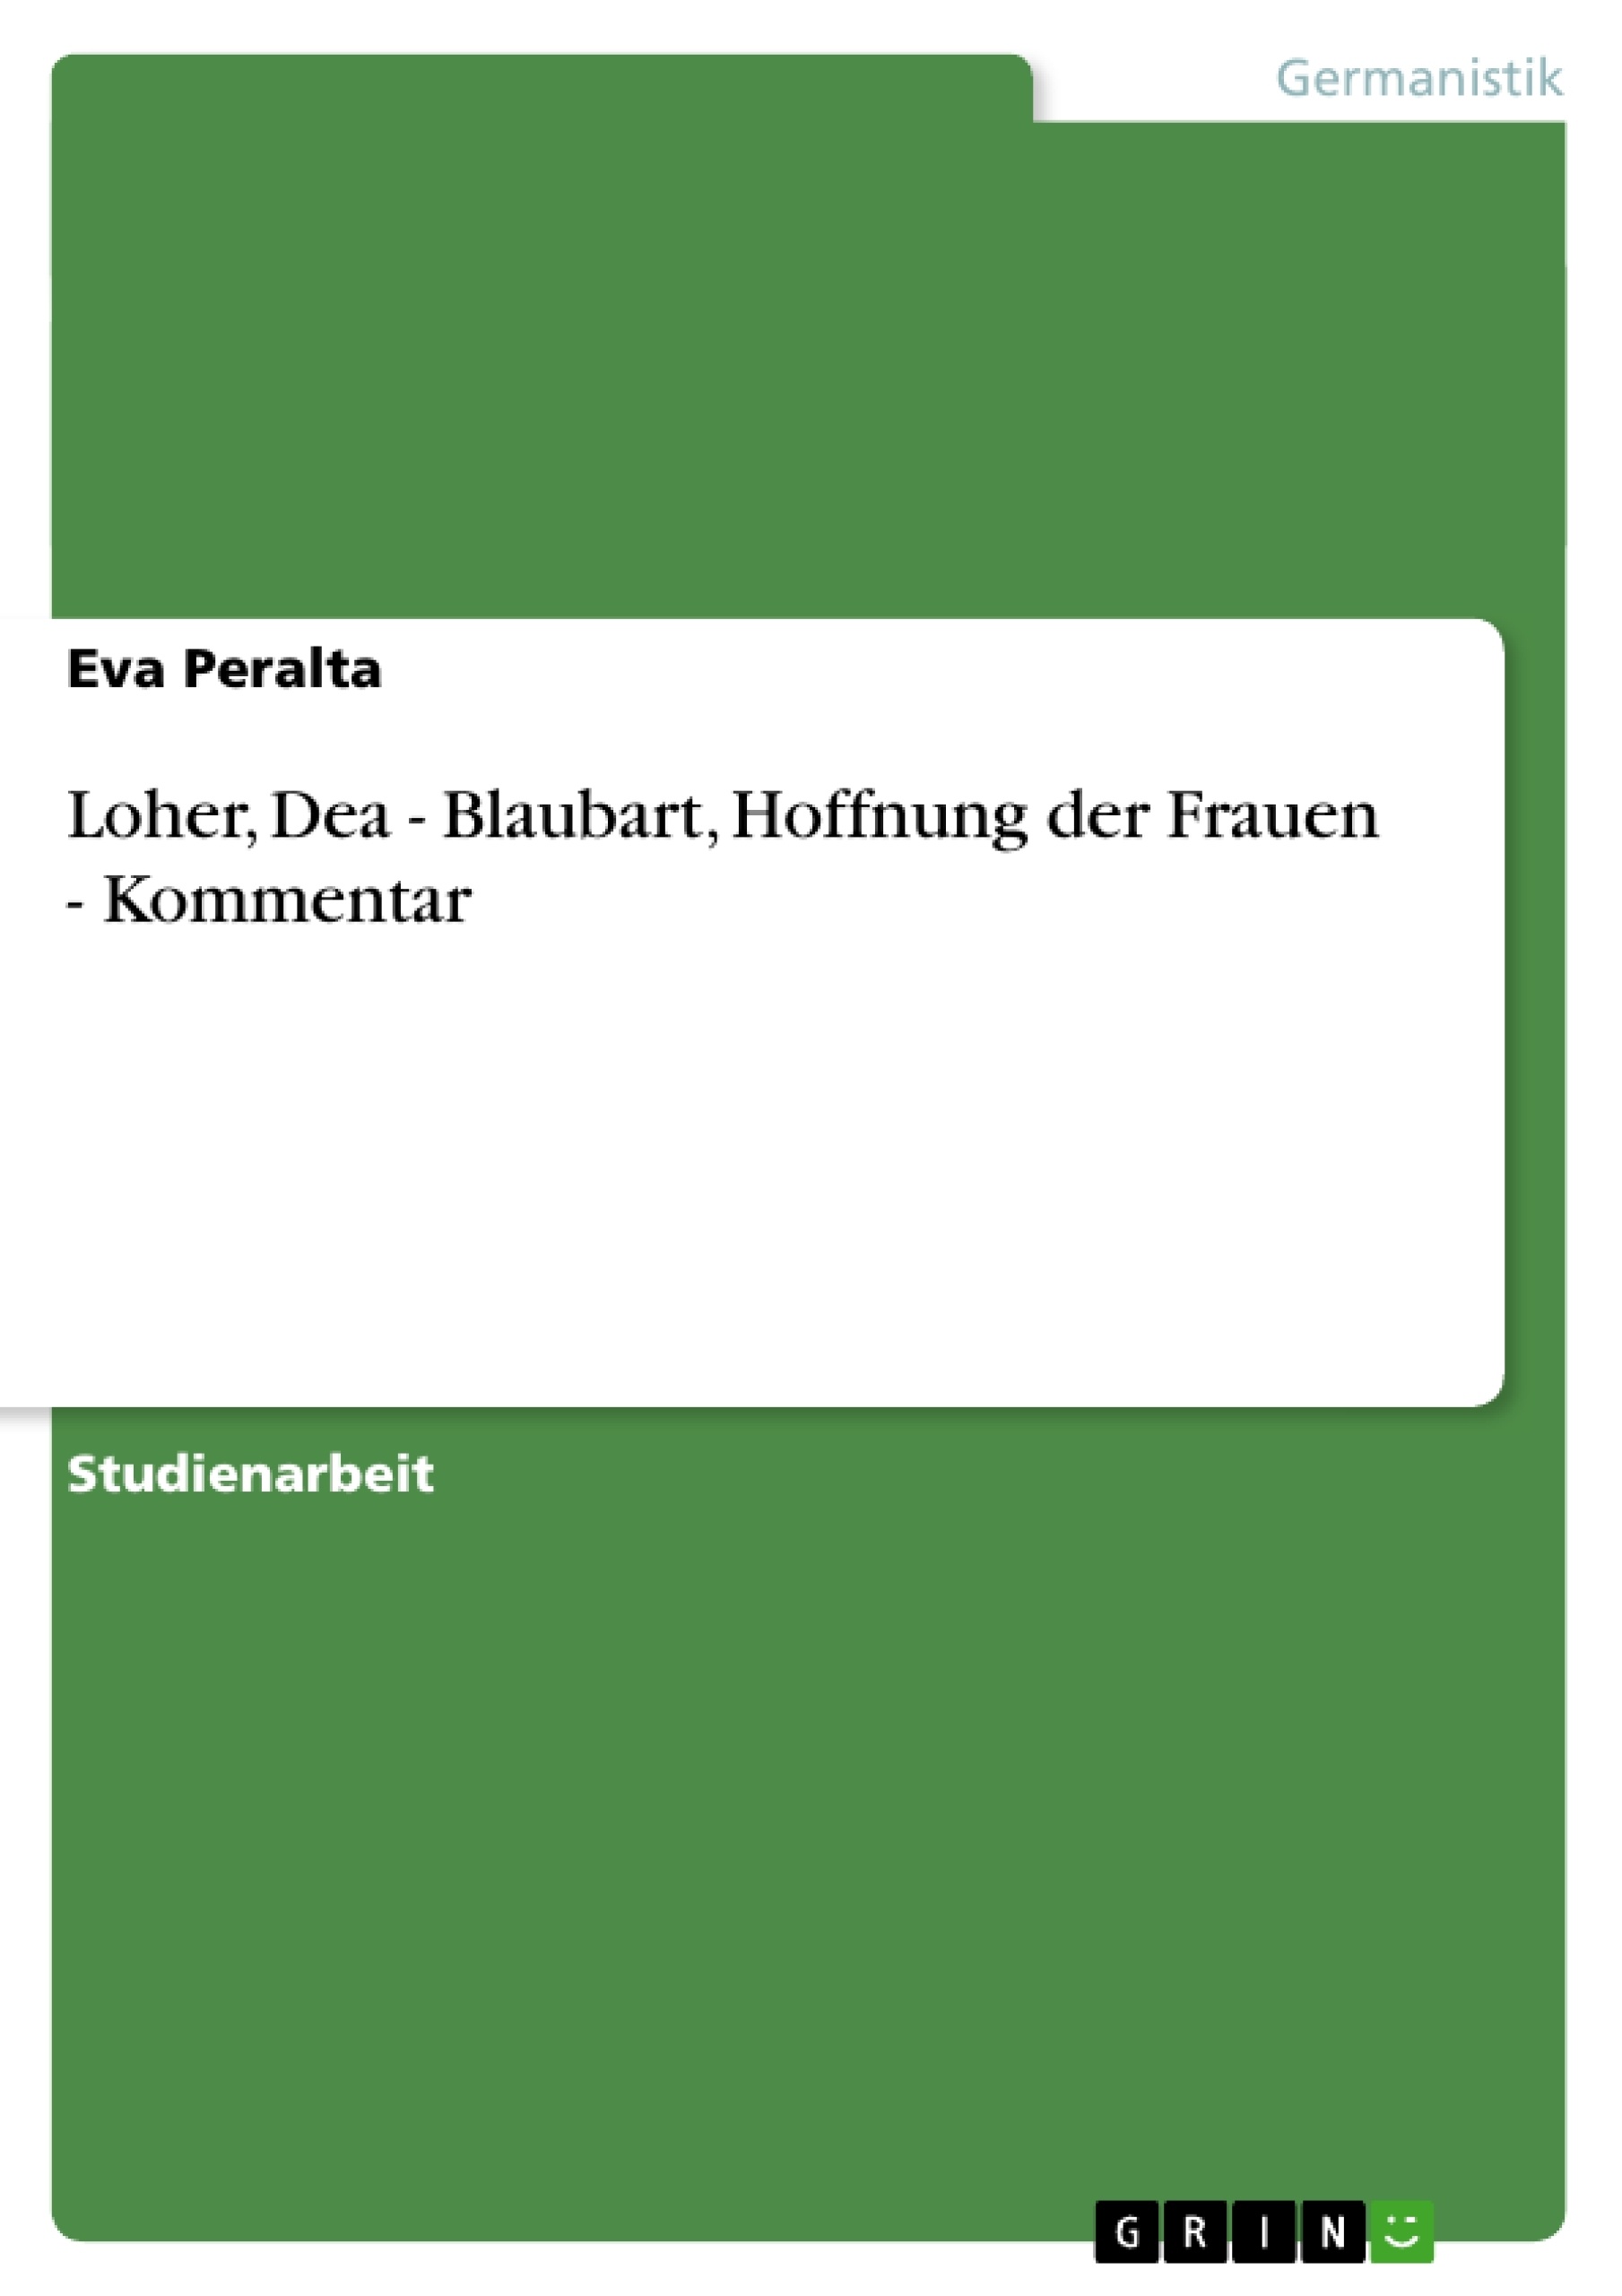 Title: Loher, Dea - Blaubart, Hoffnung der Frauen - Kommentar